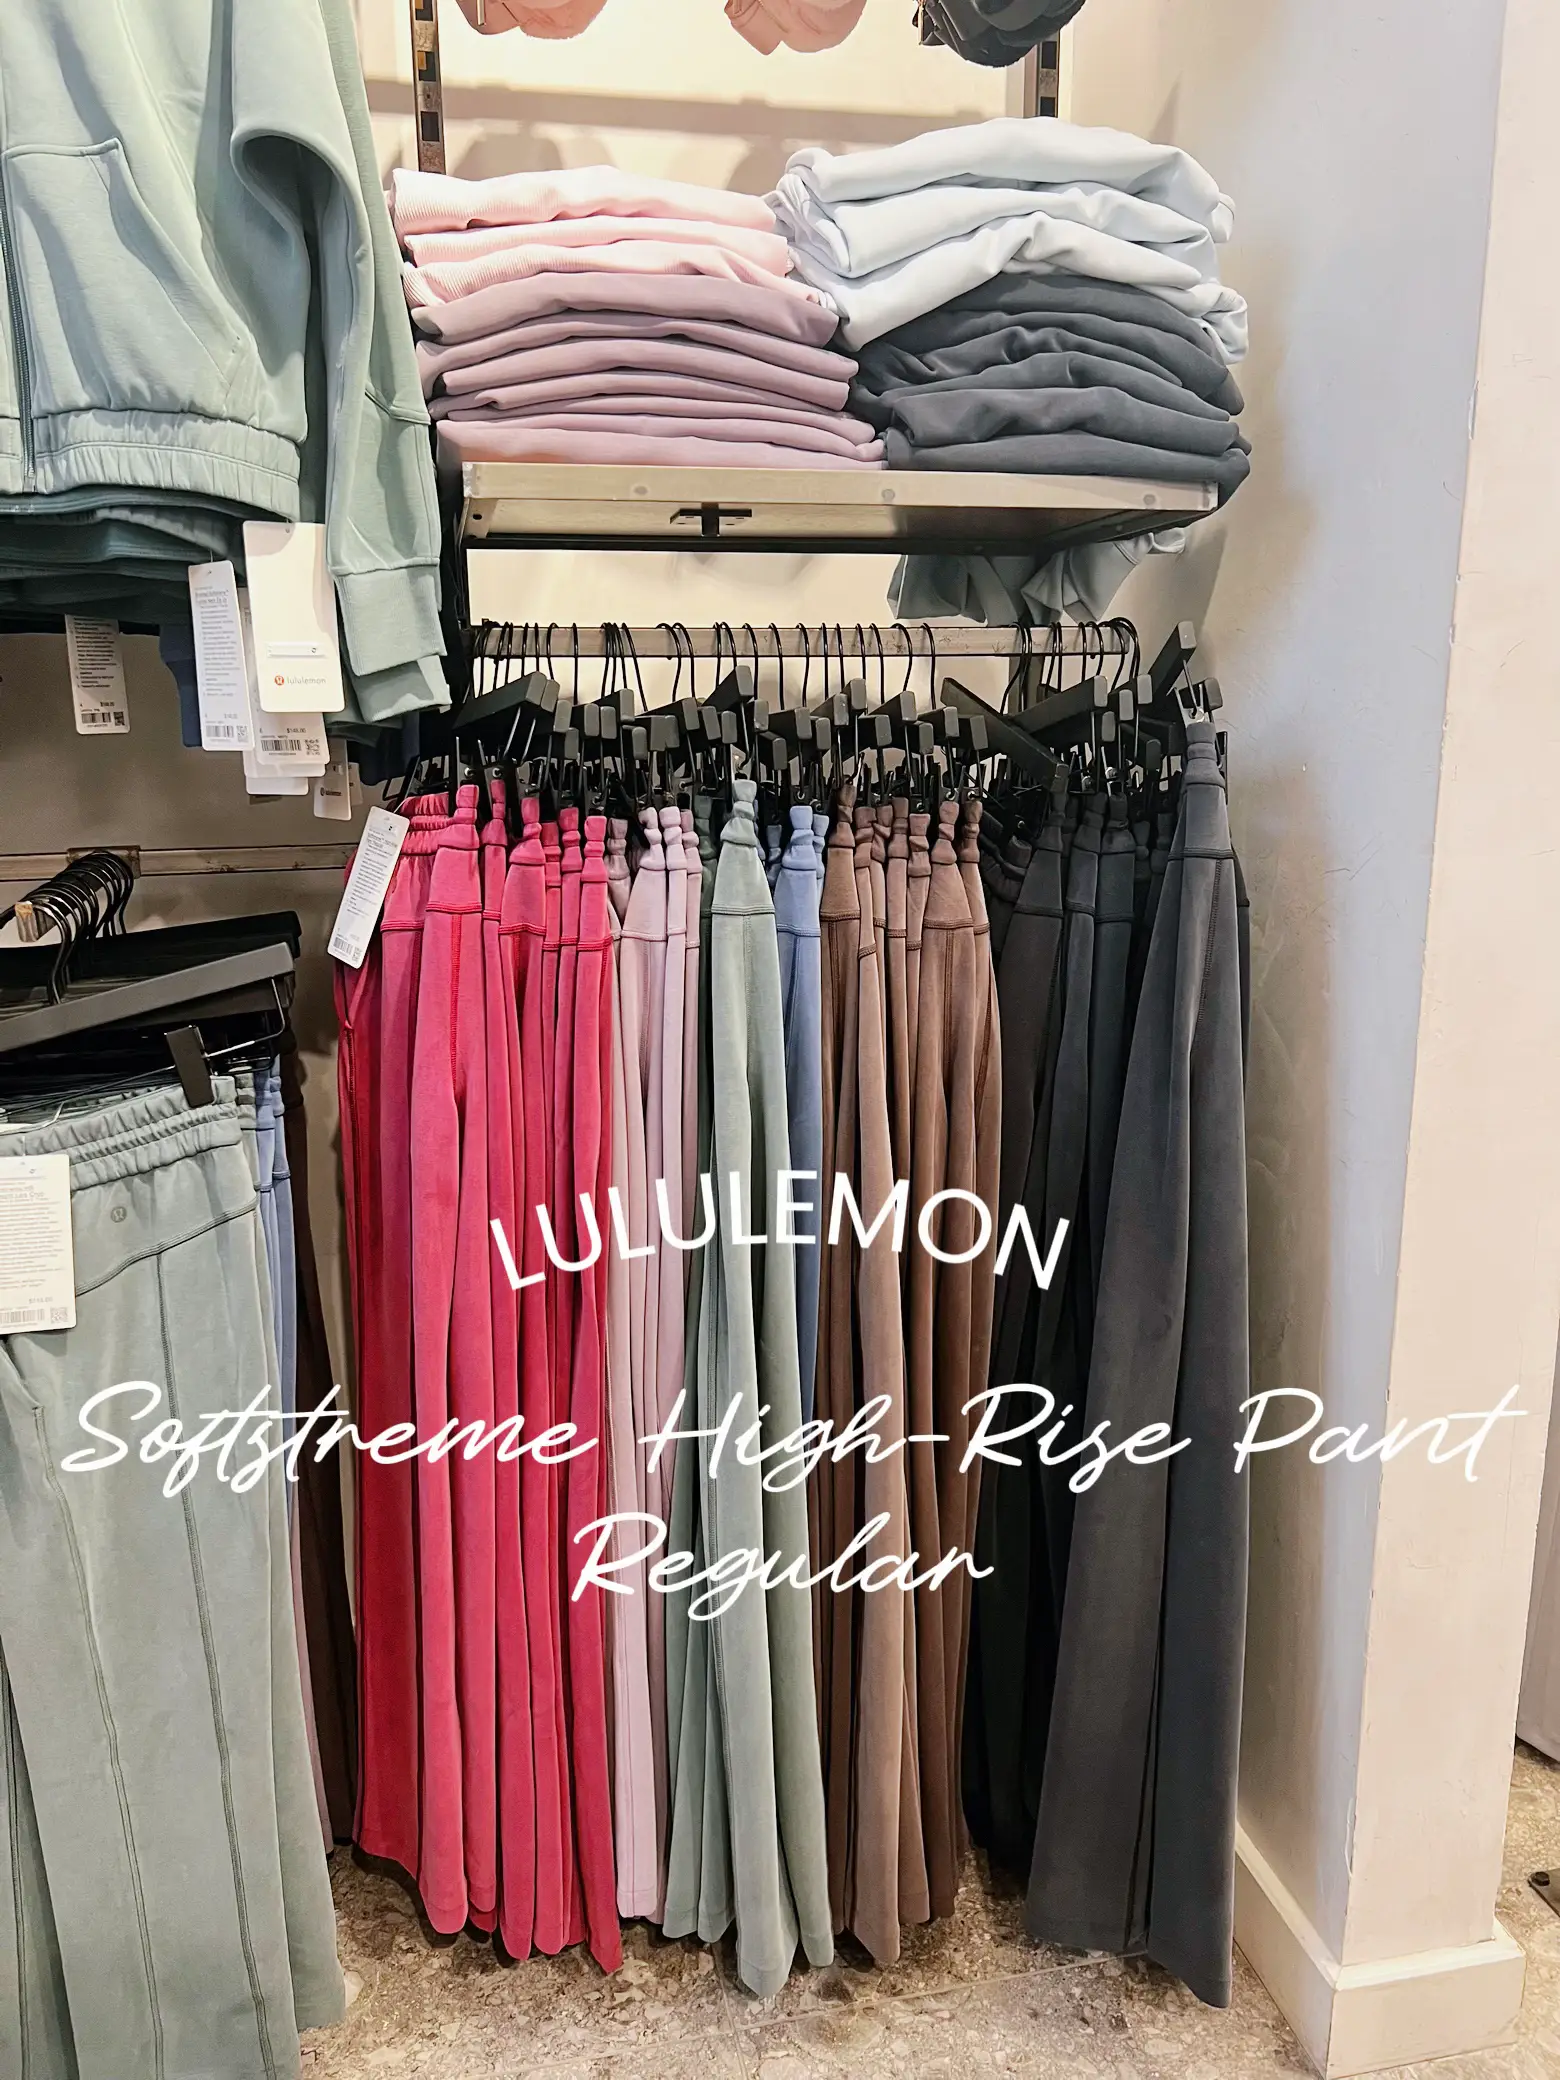 Lululemon Softstreme High-Rise Pant
Regular's images